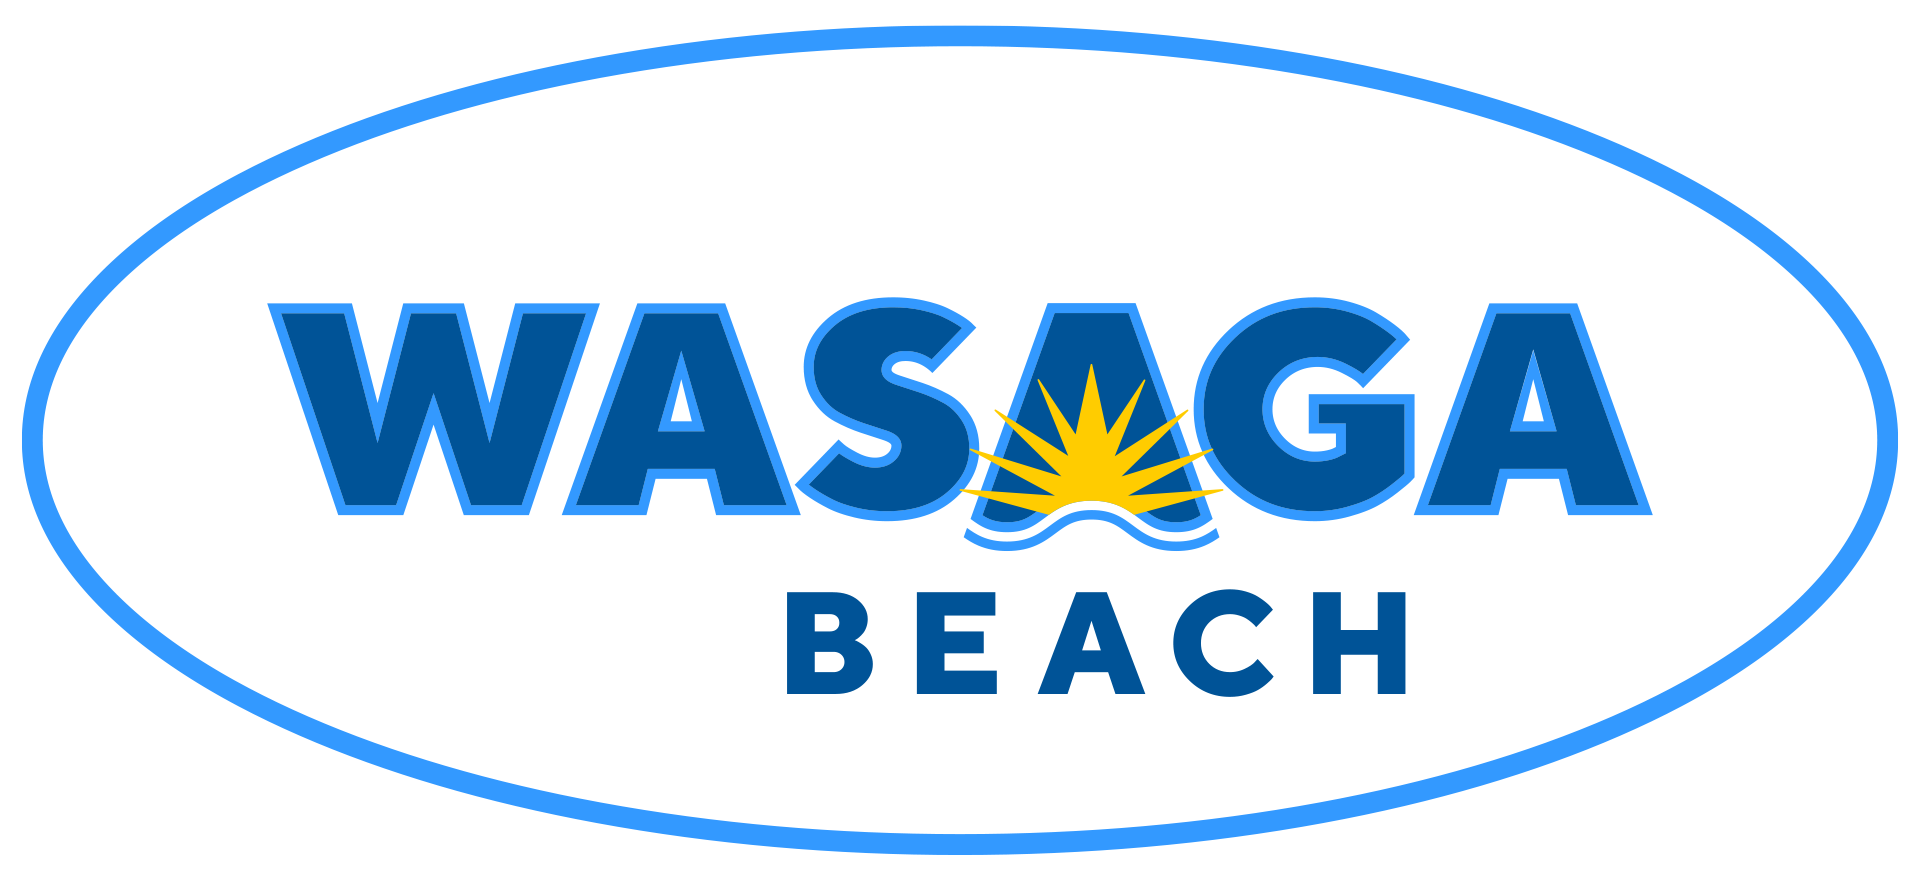 Town of Wasaga Beach Print Logo 